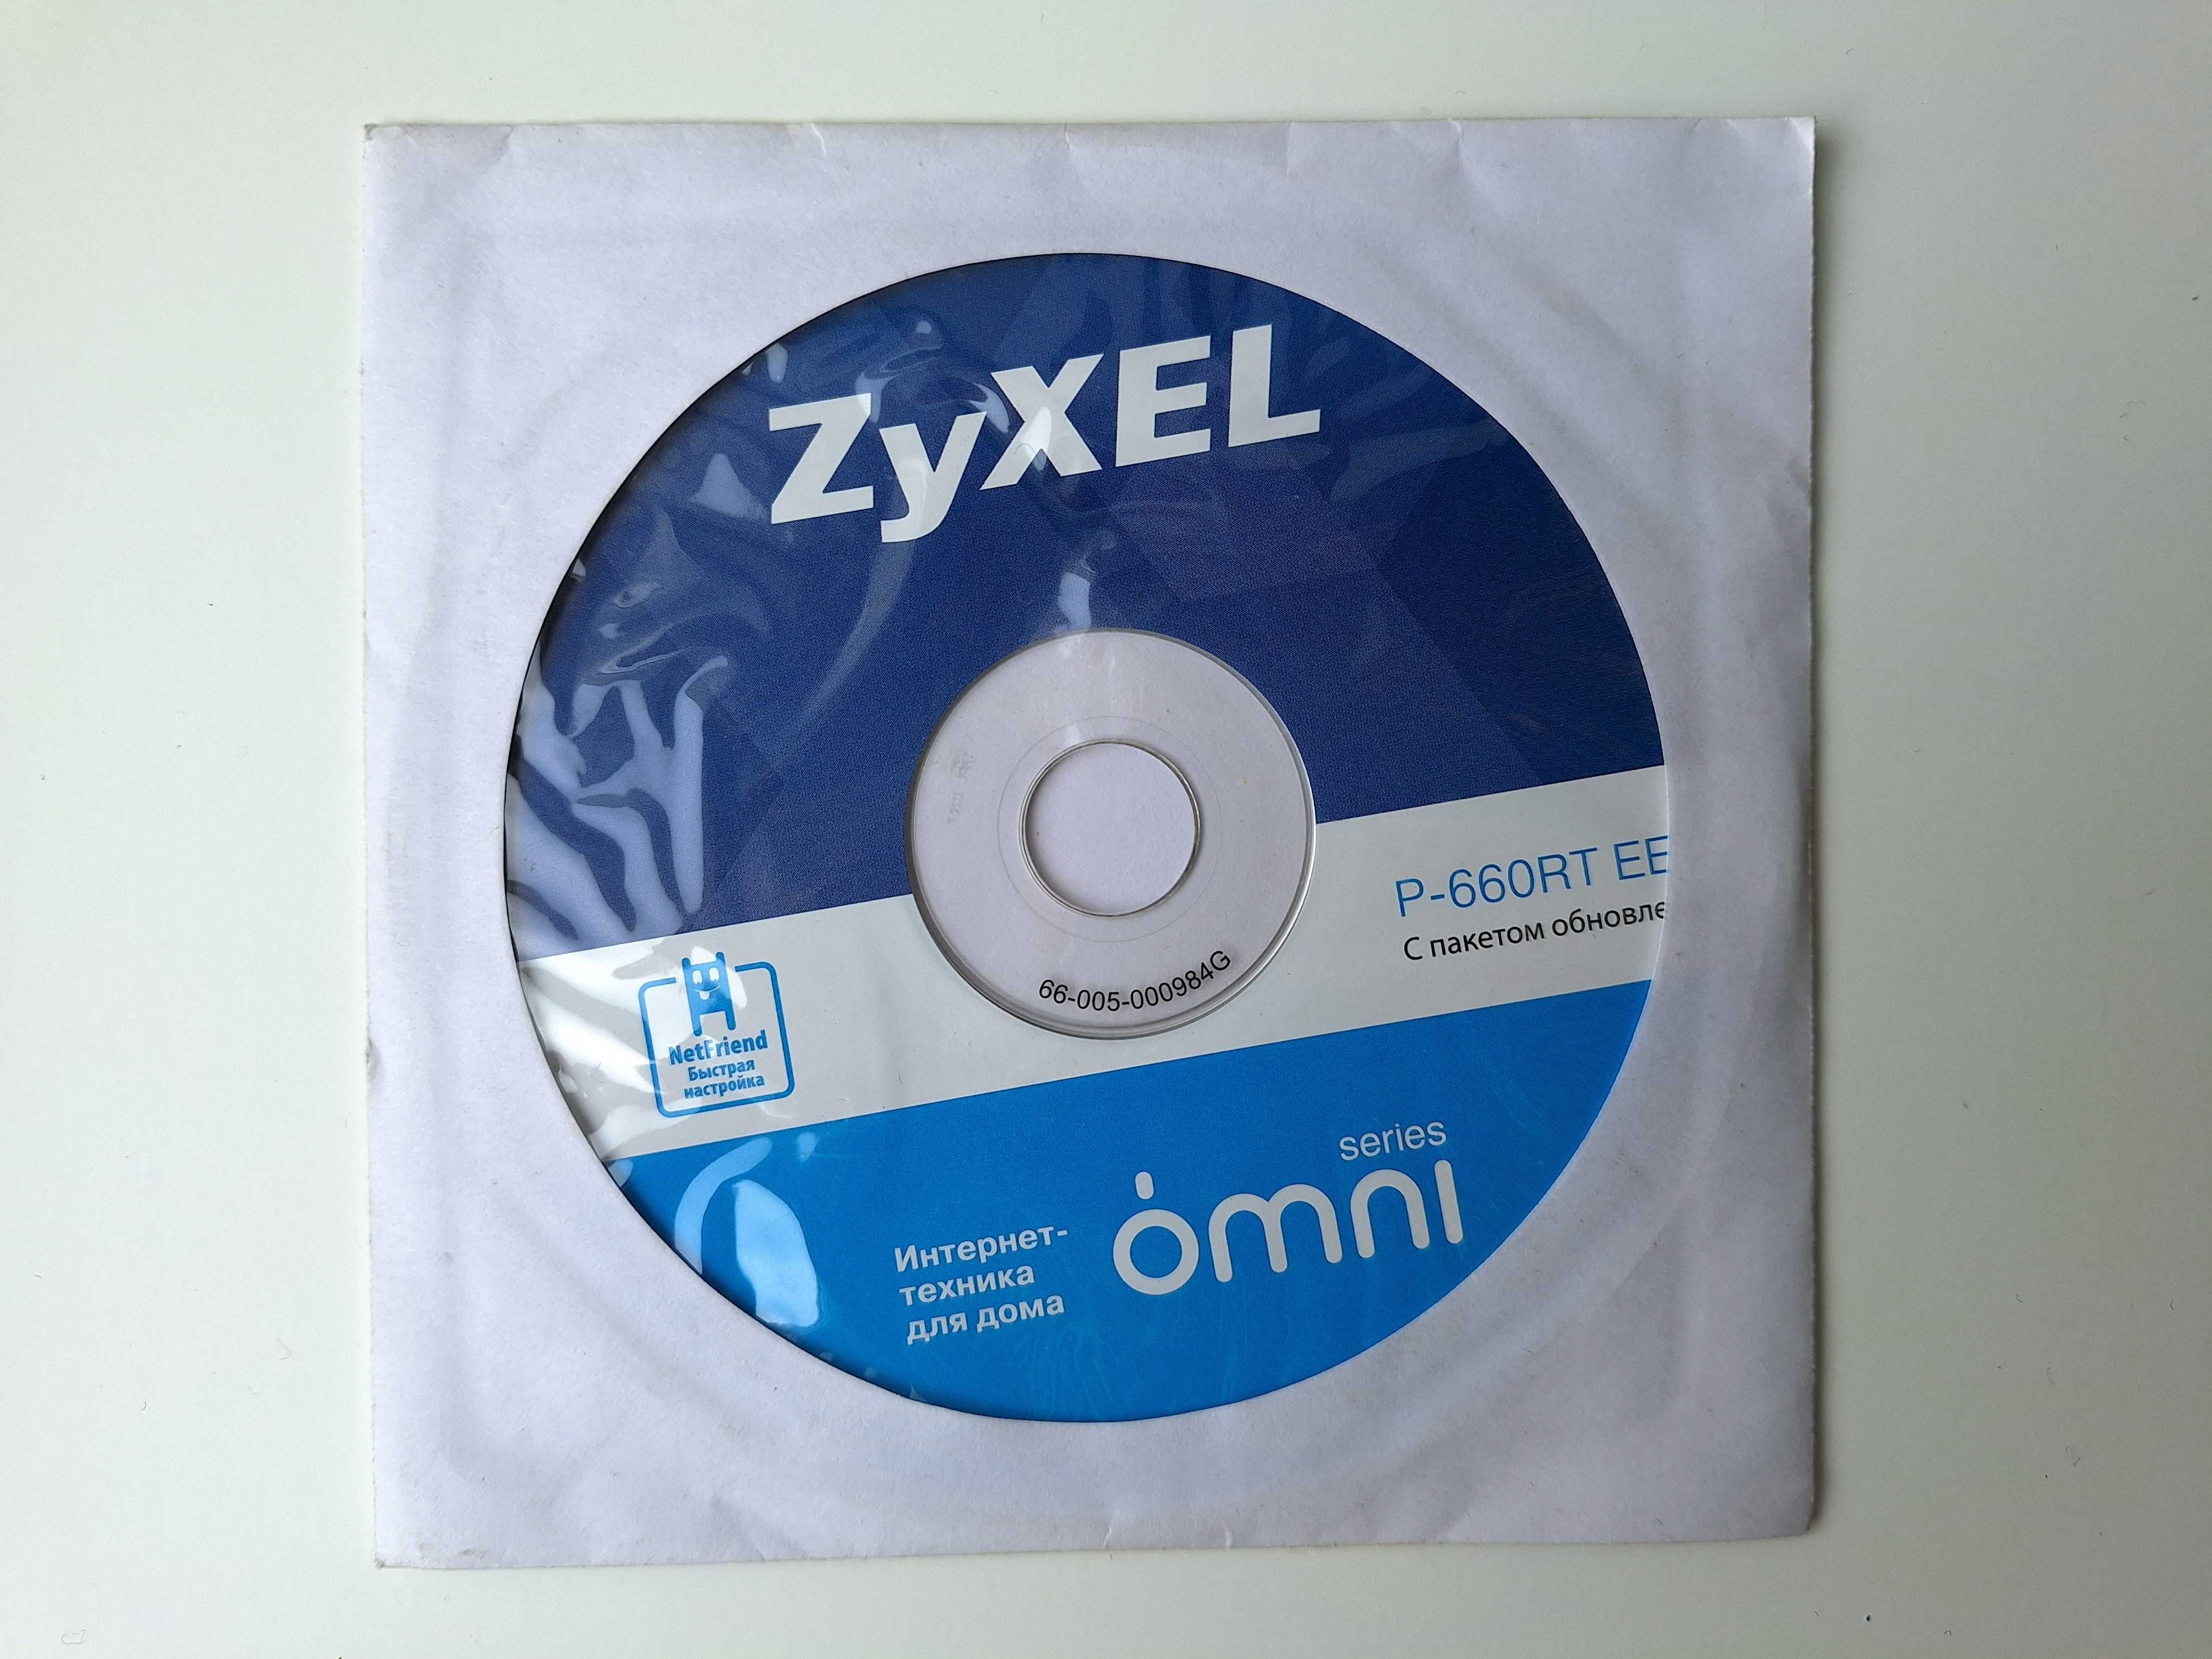 ADSL2+ модем ZyXel P-660RT EE